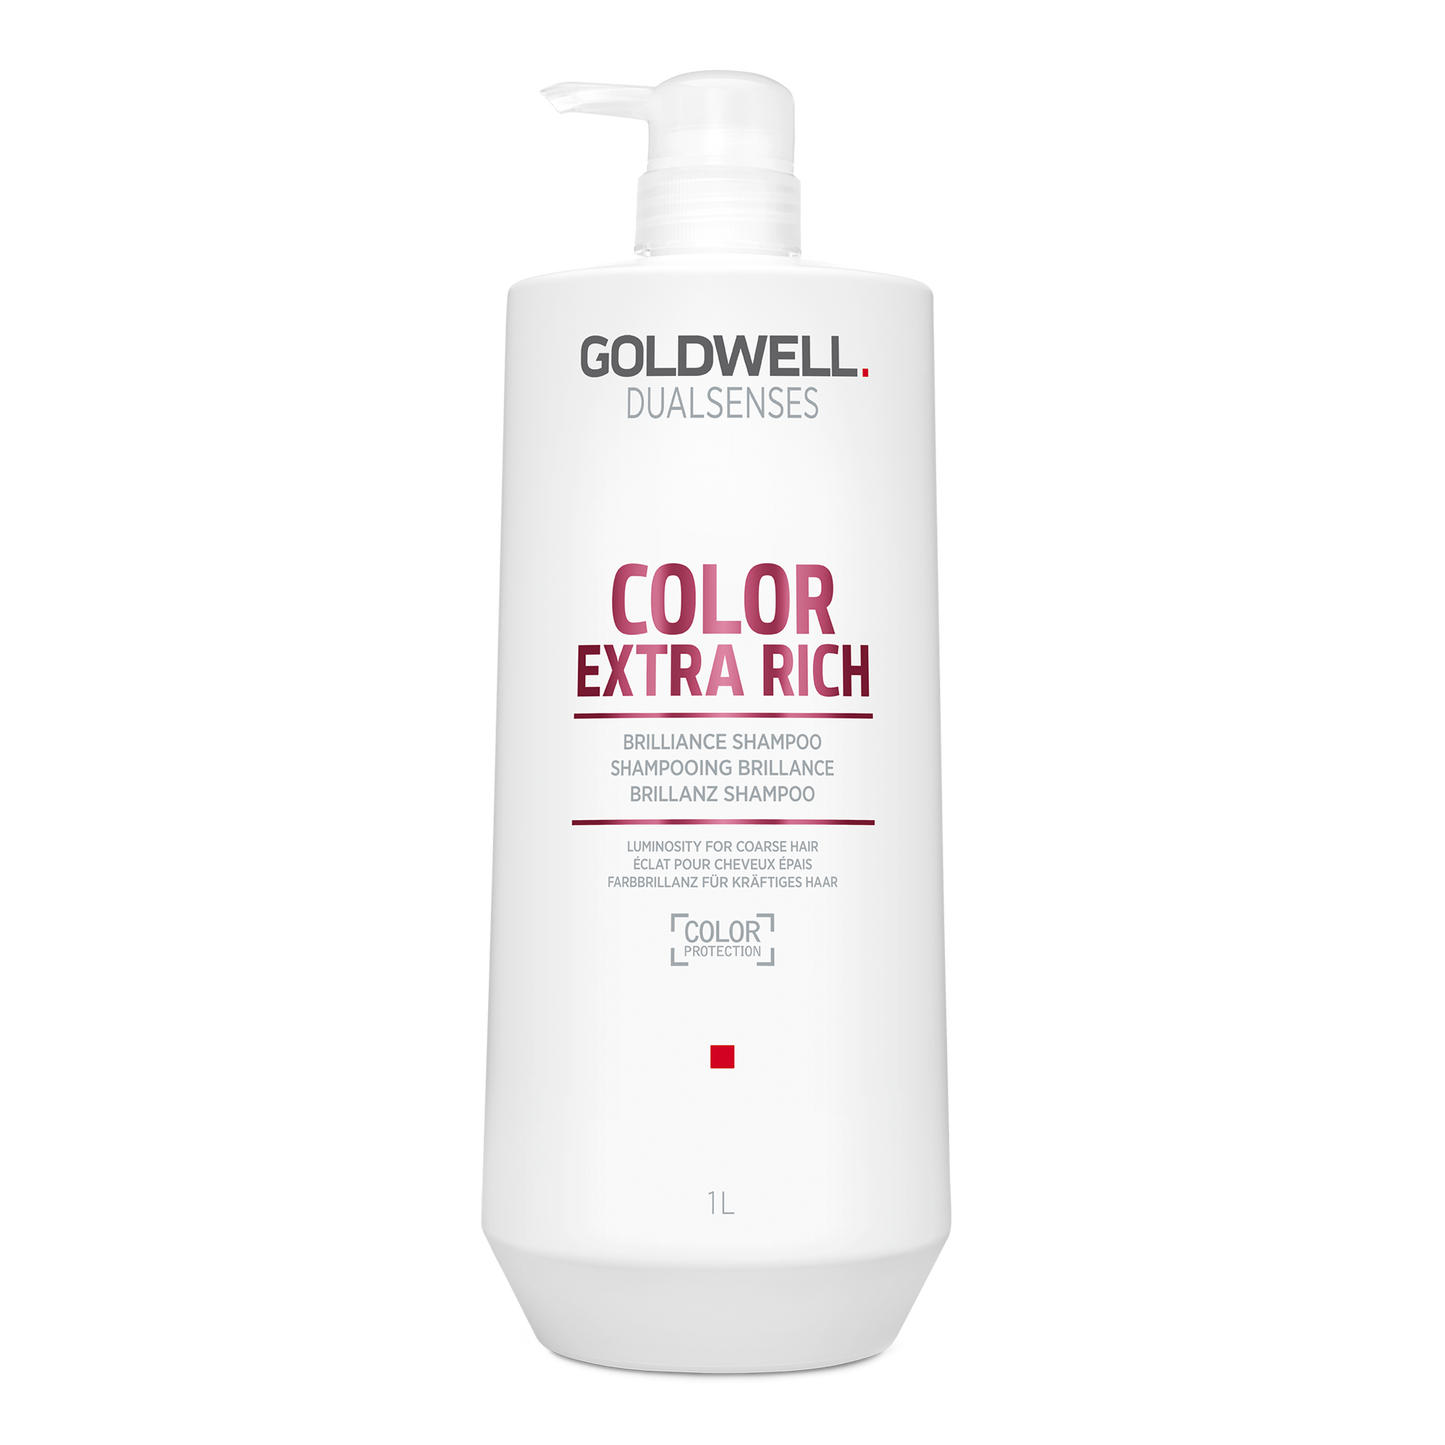 Dualsenses Color Extra Rich Brilliance Shampoo 1L